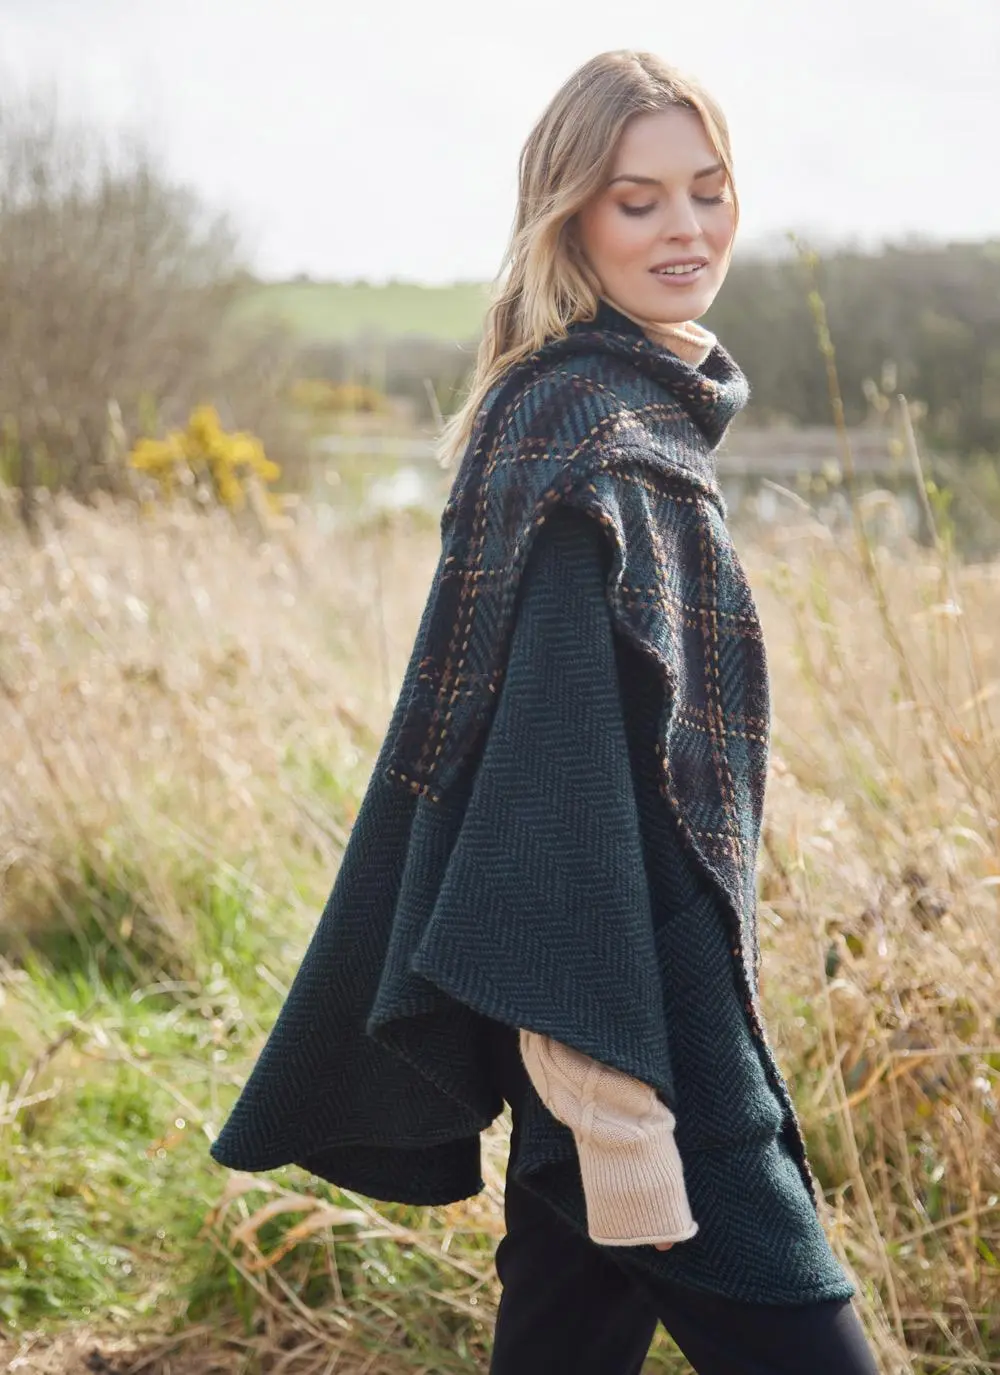 Side angle of blonde woman in grassy Irish countryside wearing dark green herringbone cape.